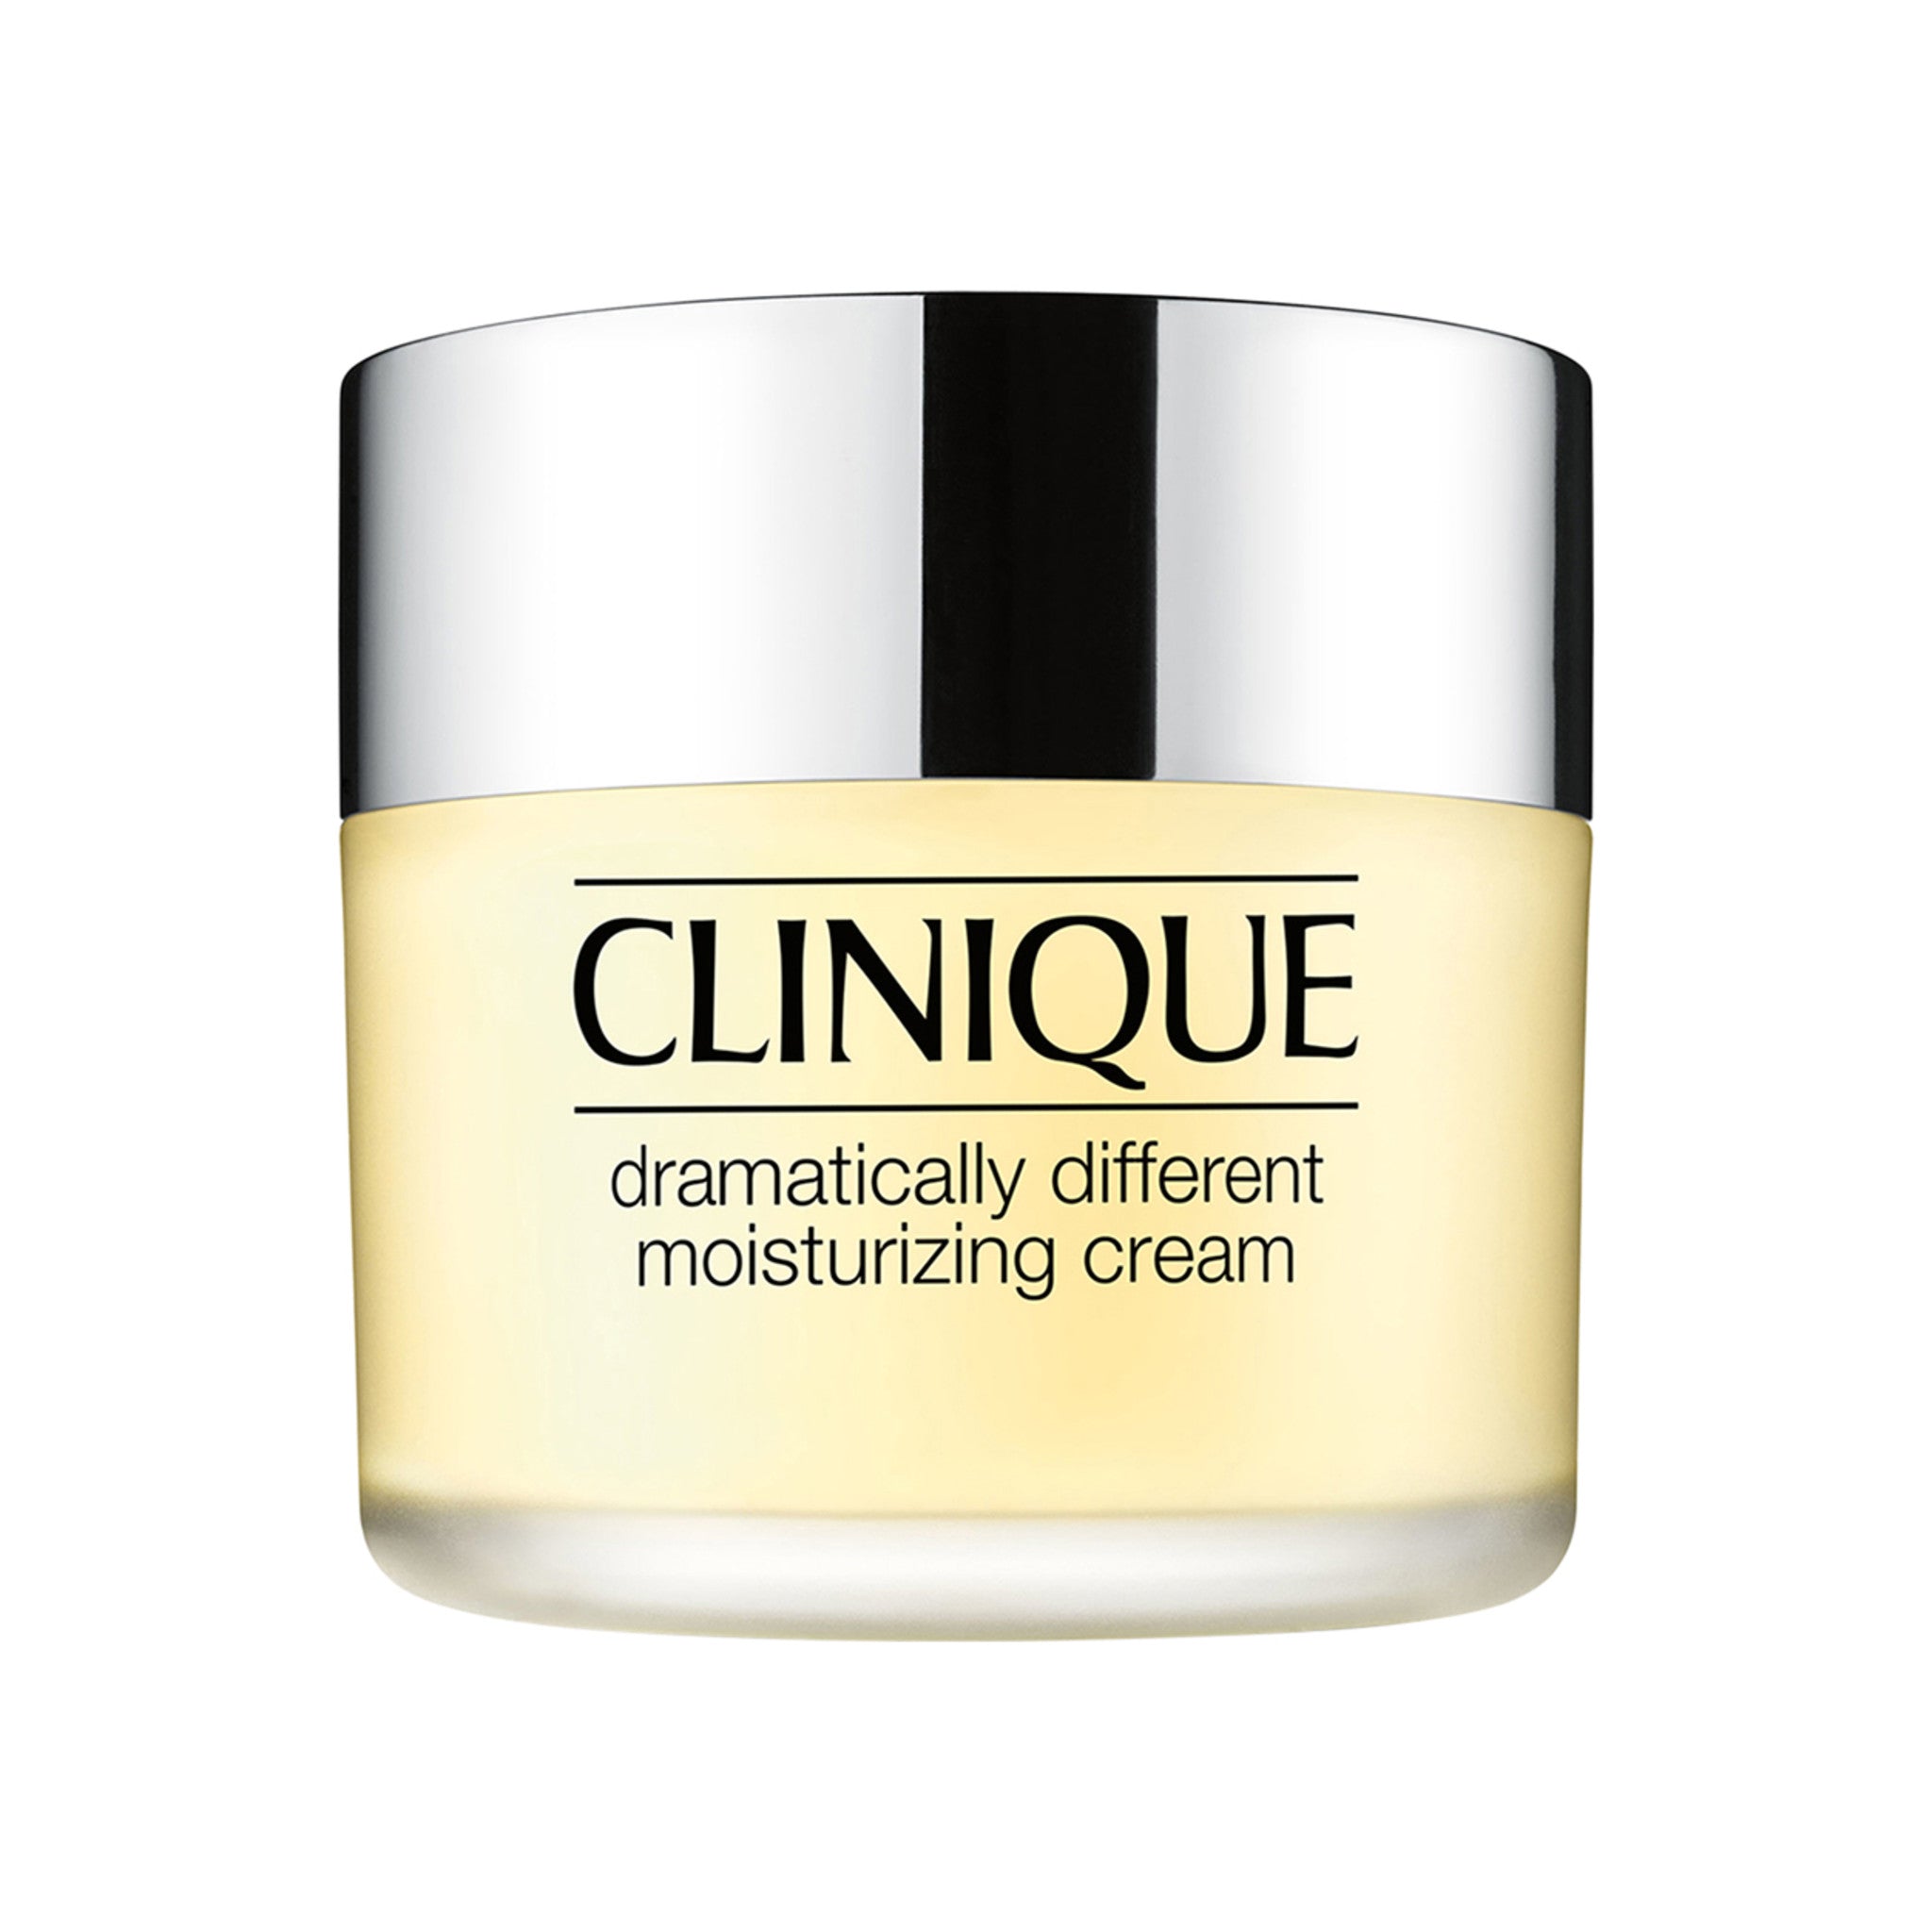 Clinique Dramatically Different Moisturizing Cream Size variant: 1.7 oz main image.